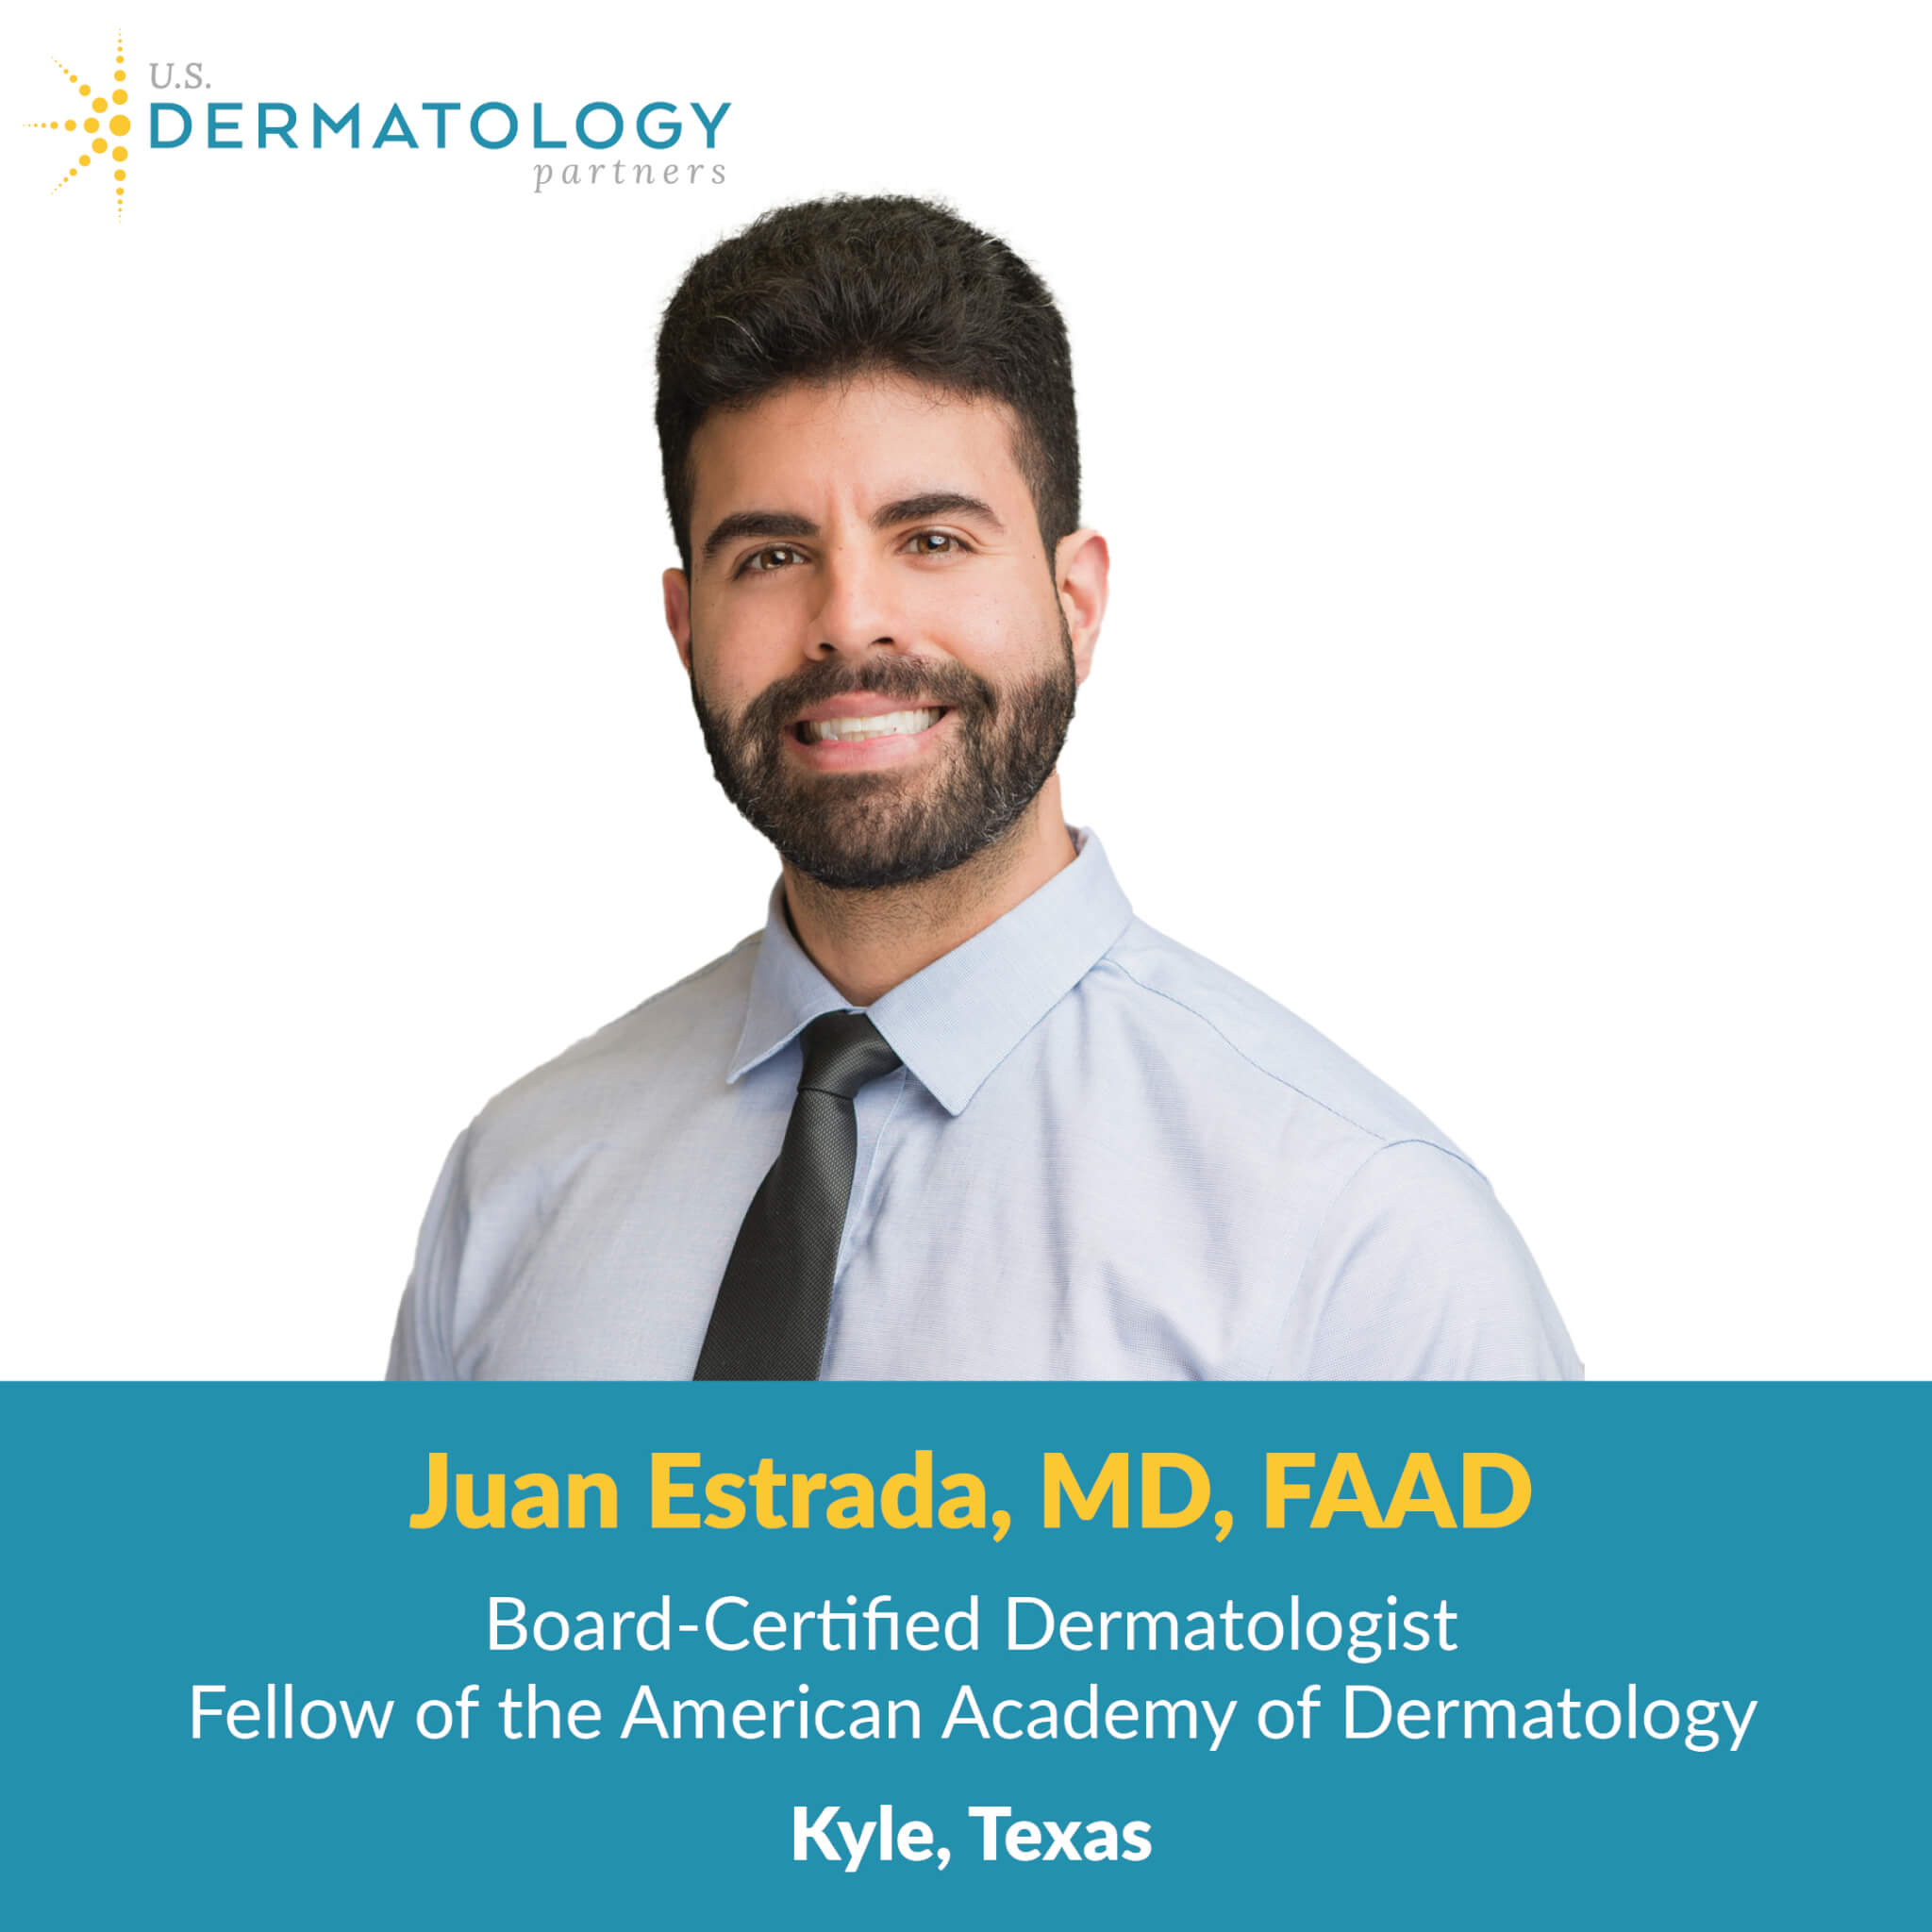 Dr. Juan Estrada is a Board-Certified Dermatologist serving patients in Kyle, Texas at U.S. Dermatology Partners